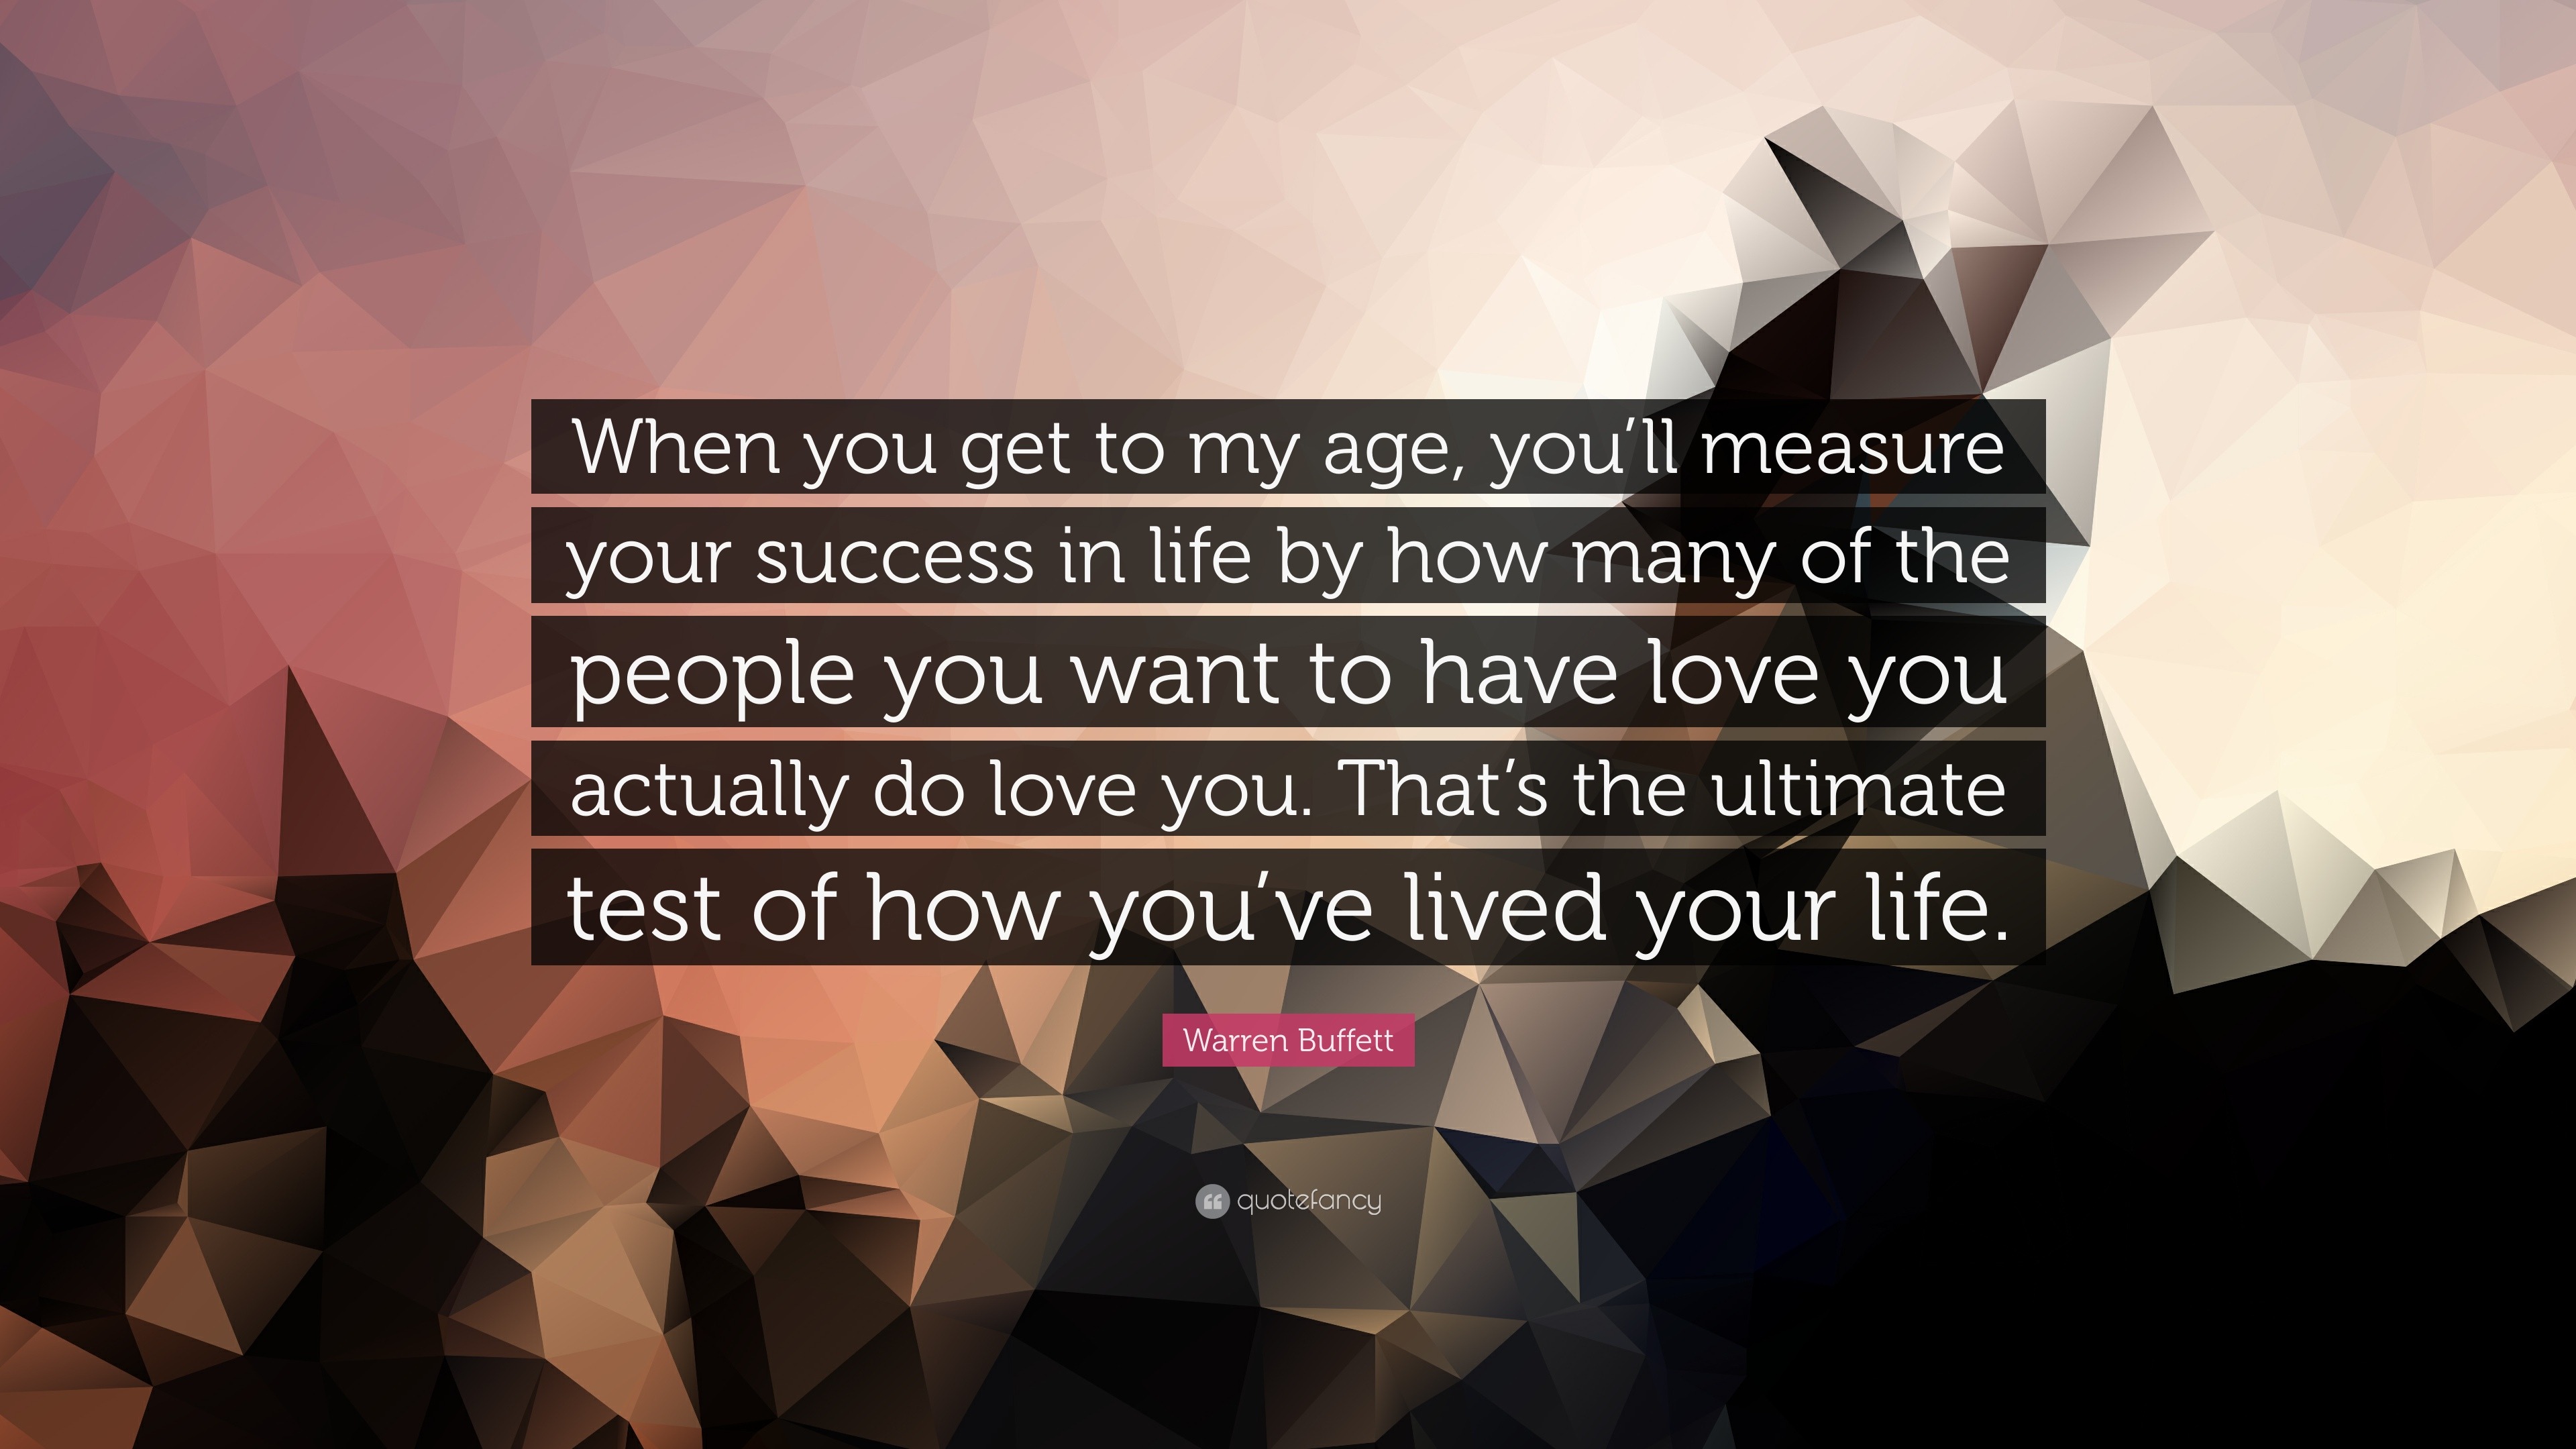 Warren Buffett Quote “When you to my age you ll measure